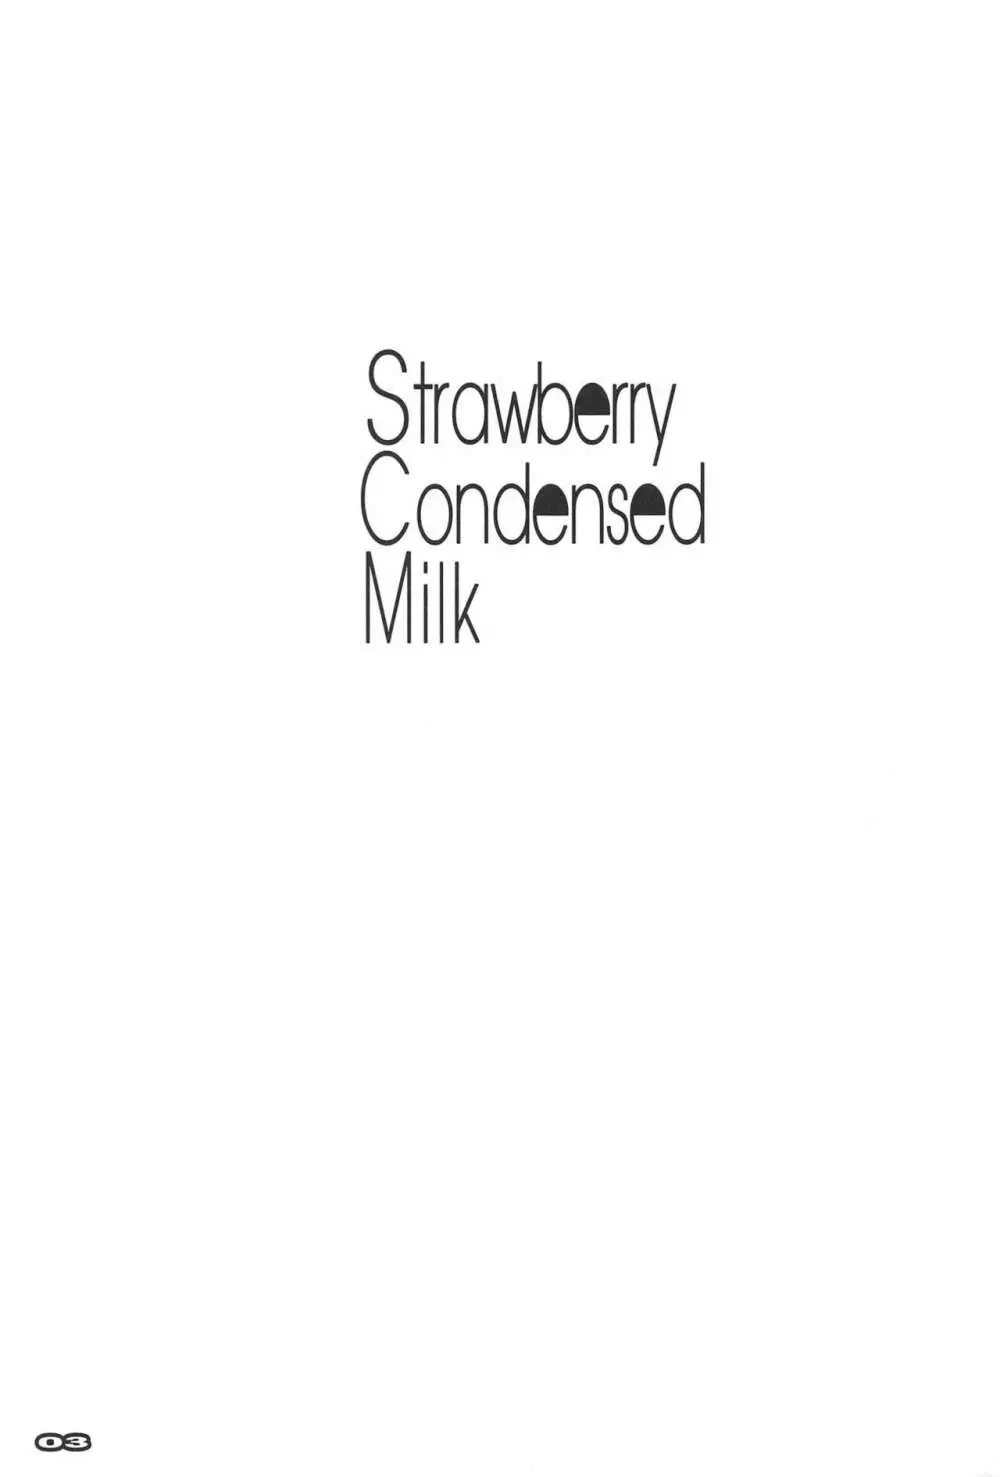 Strawberry Condensed Milk - page2